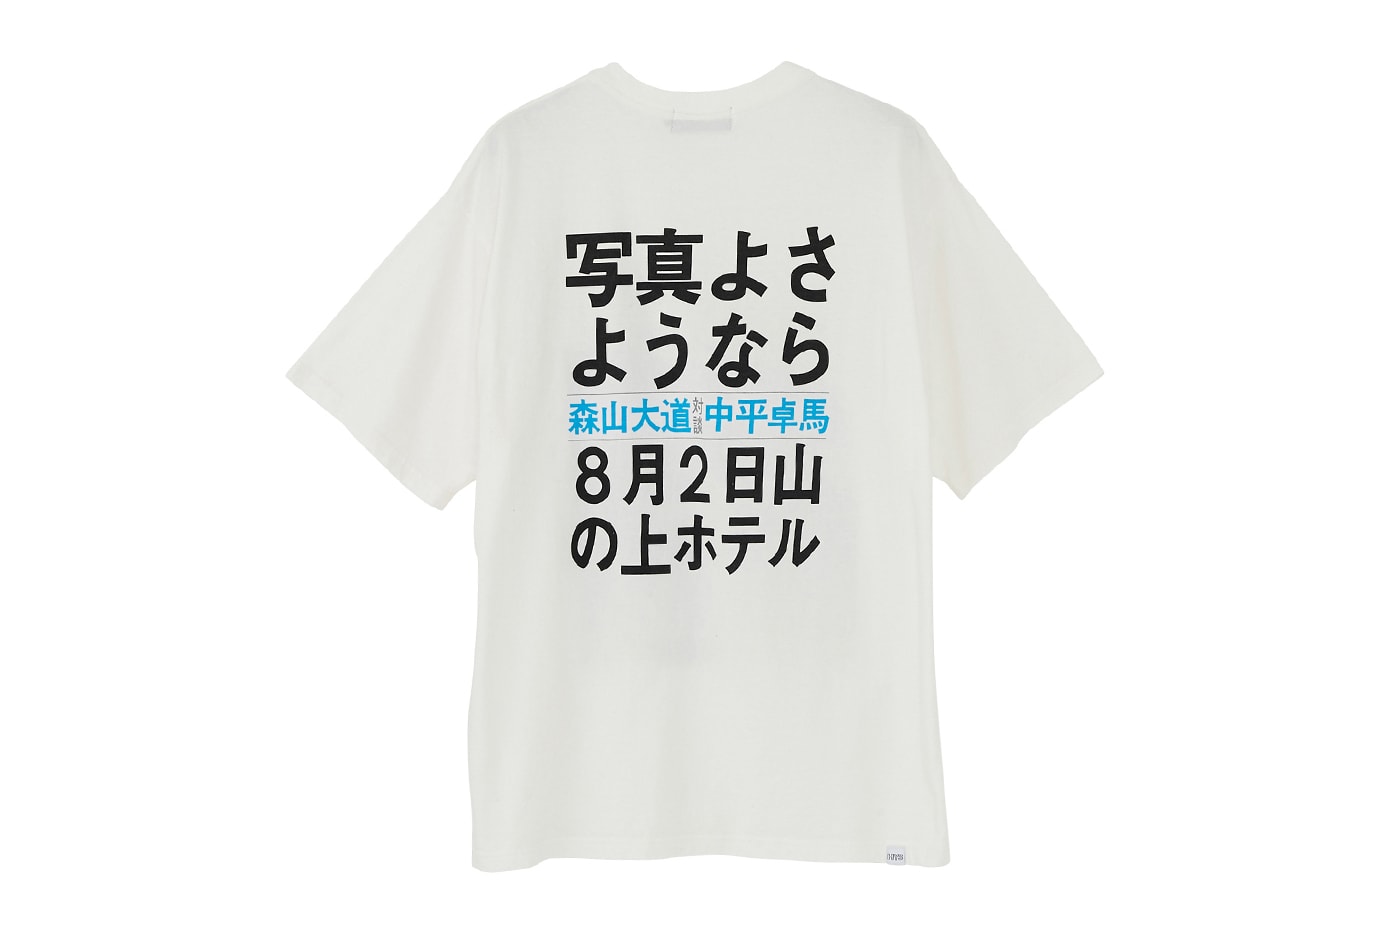 HYSTERIC GLAMOUR 為森山大道 & 中平卓馬最新展覽打造紀念 T-Shirt